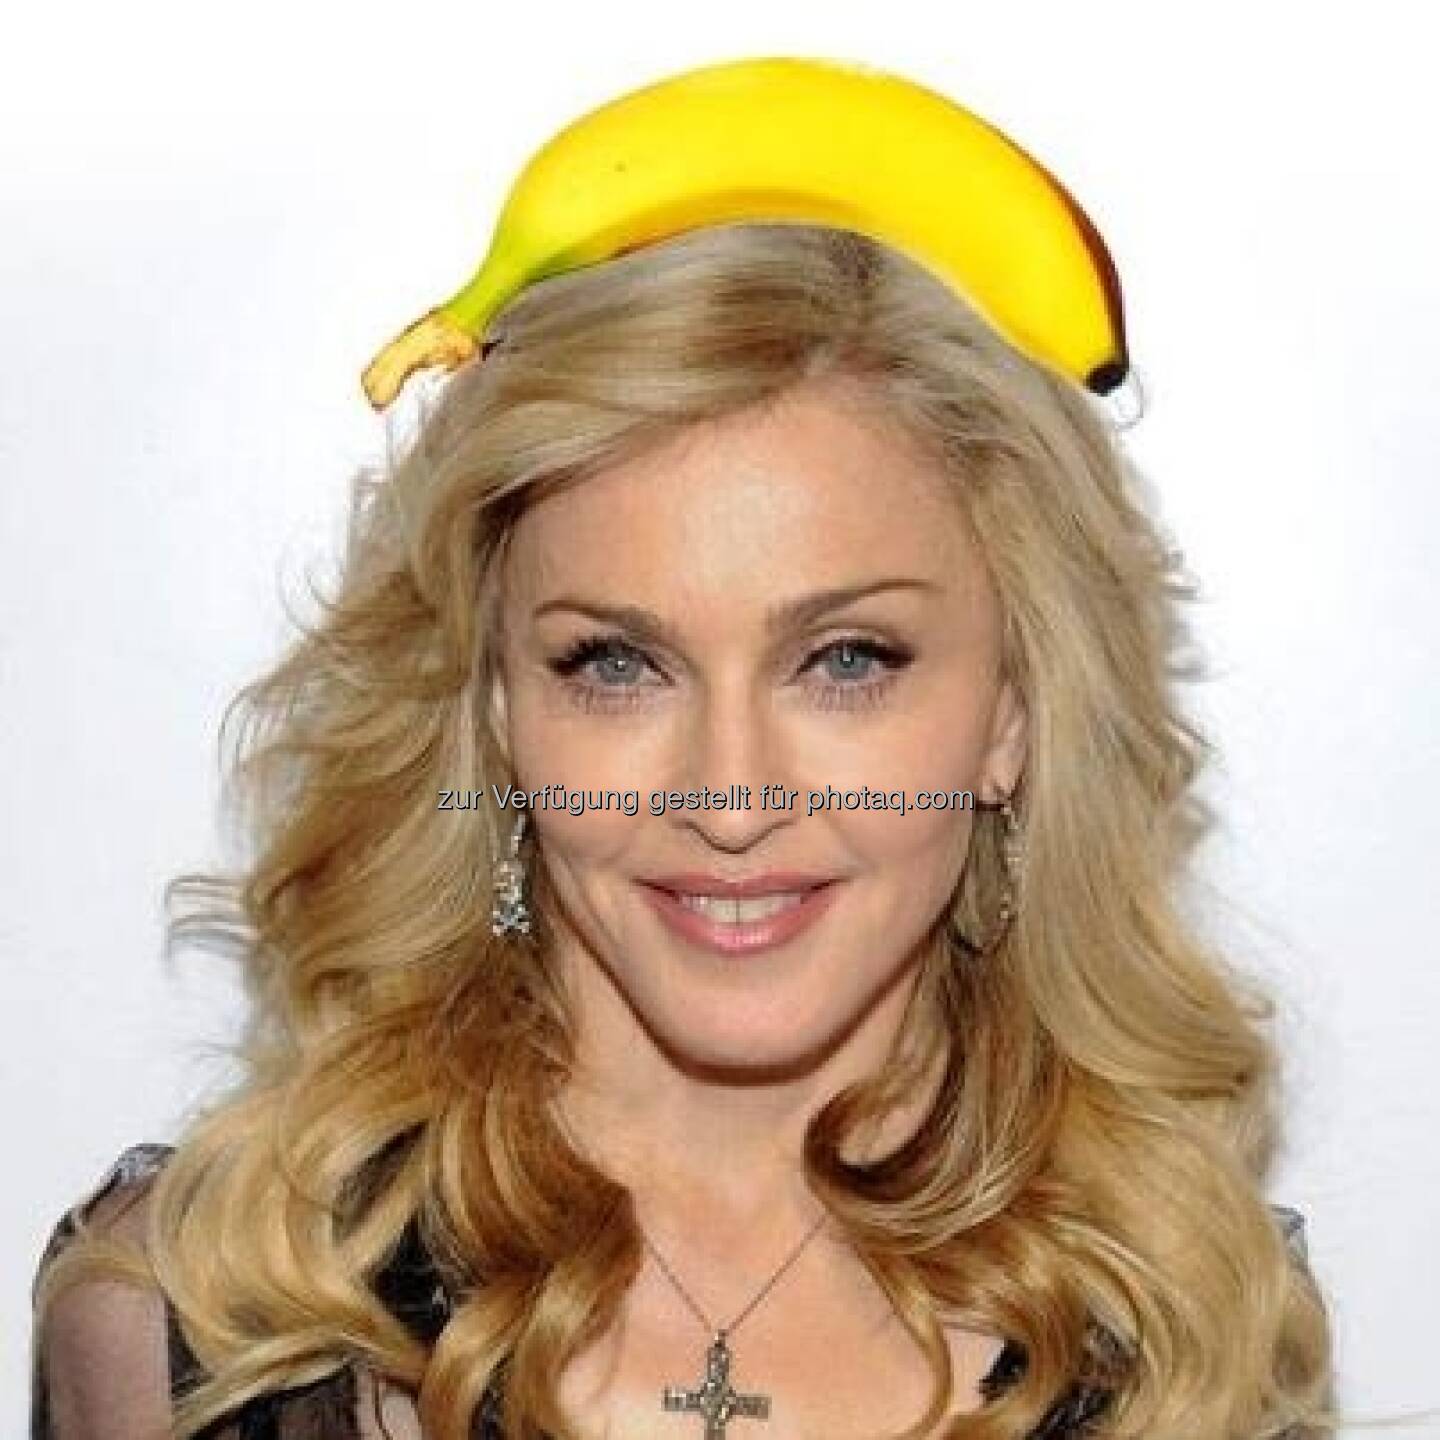 Bananing Madonna https://www.facebook.com/bananingofficial